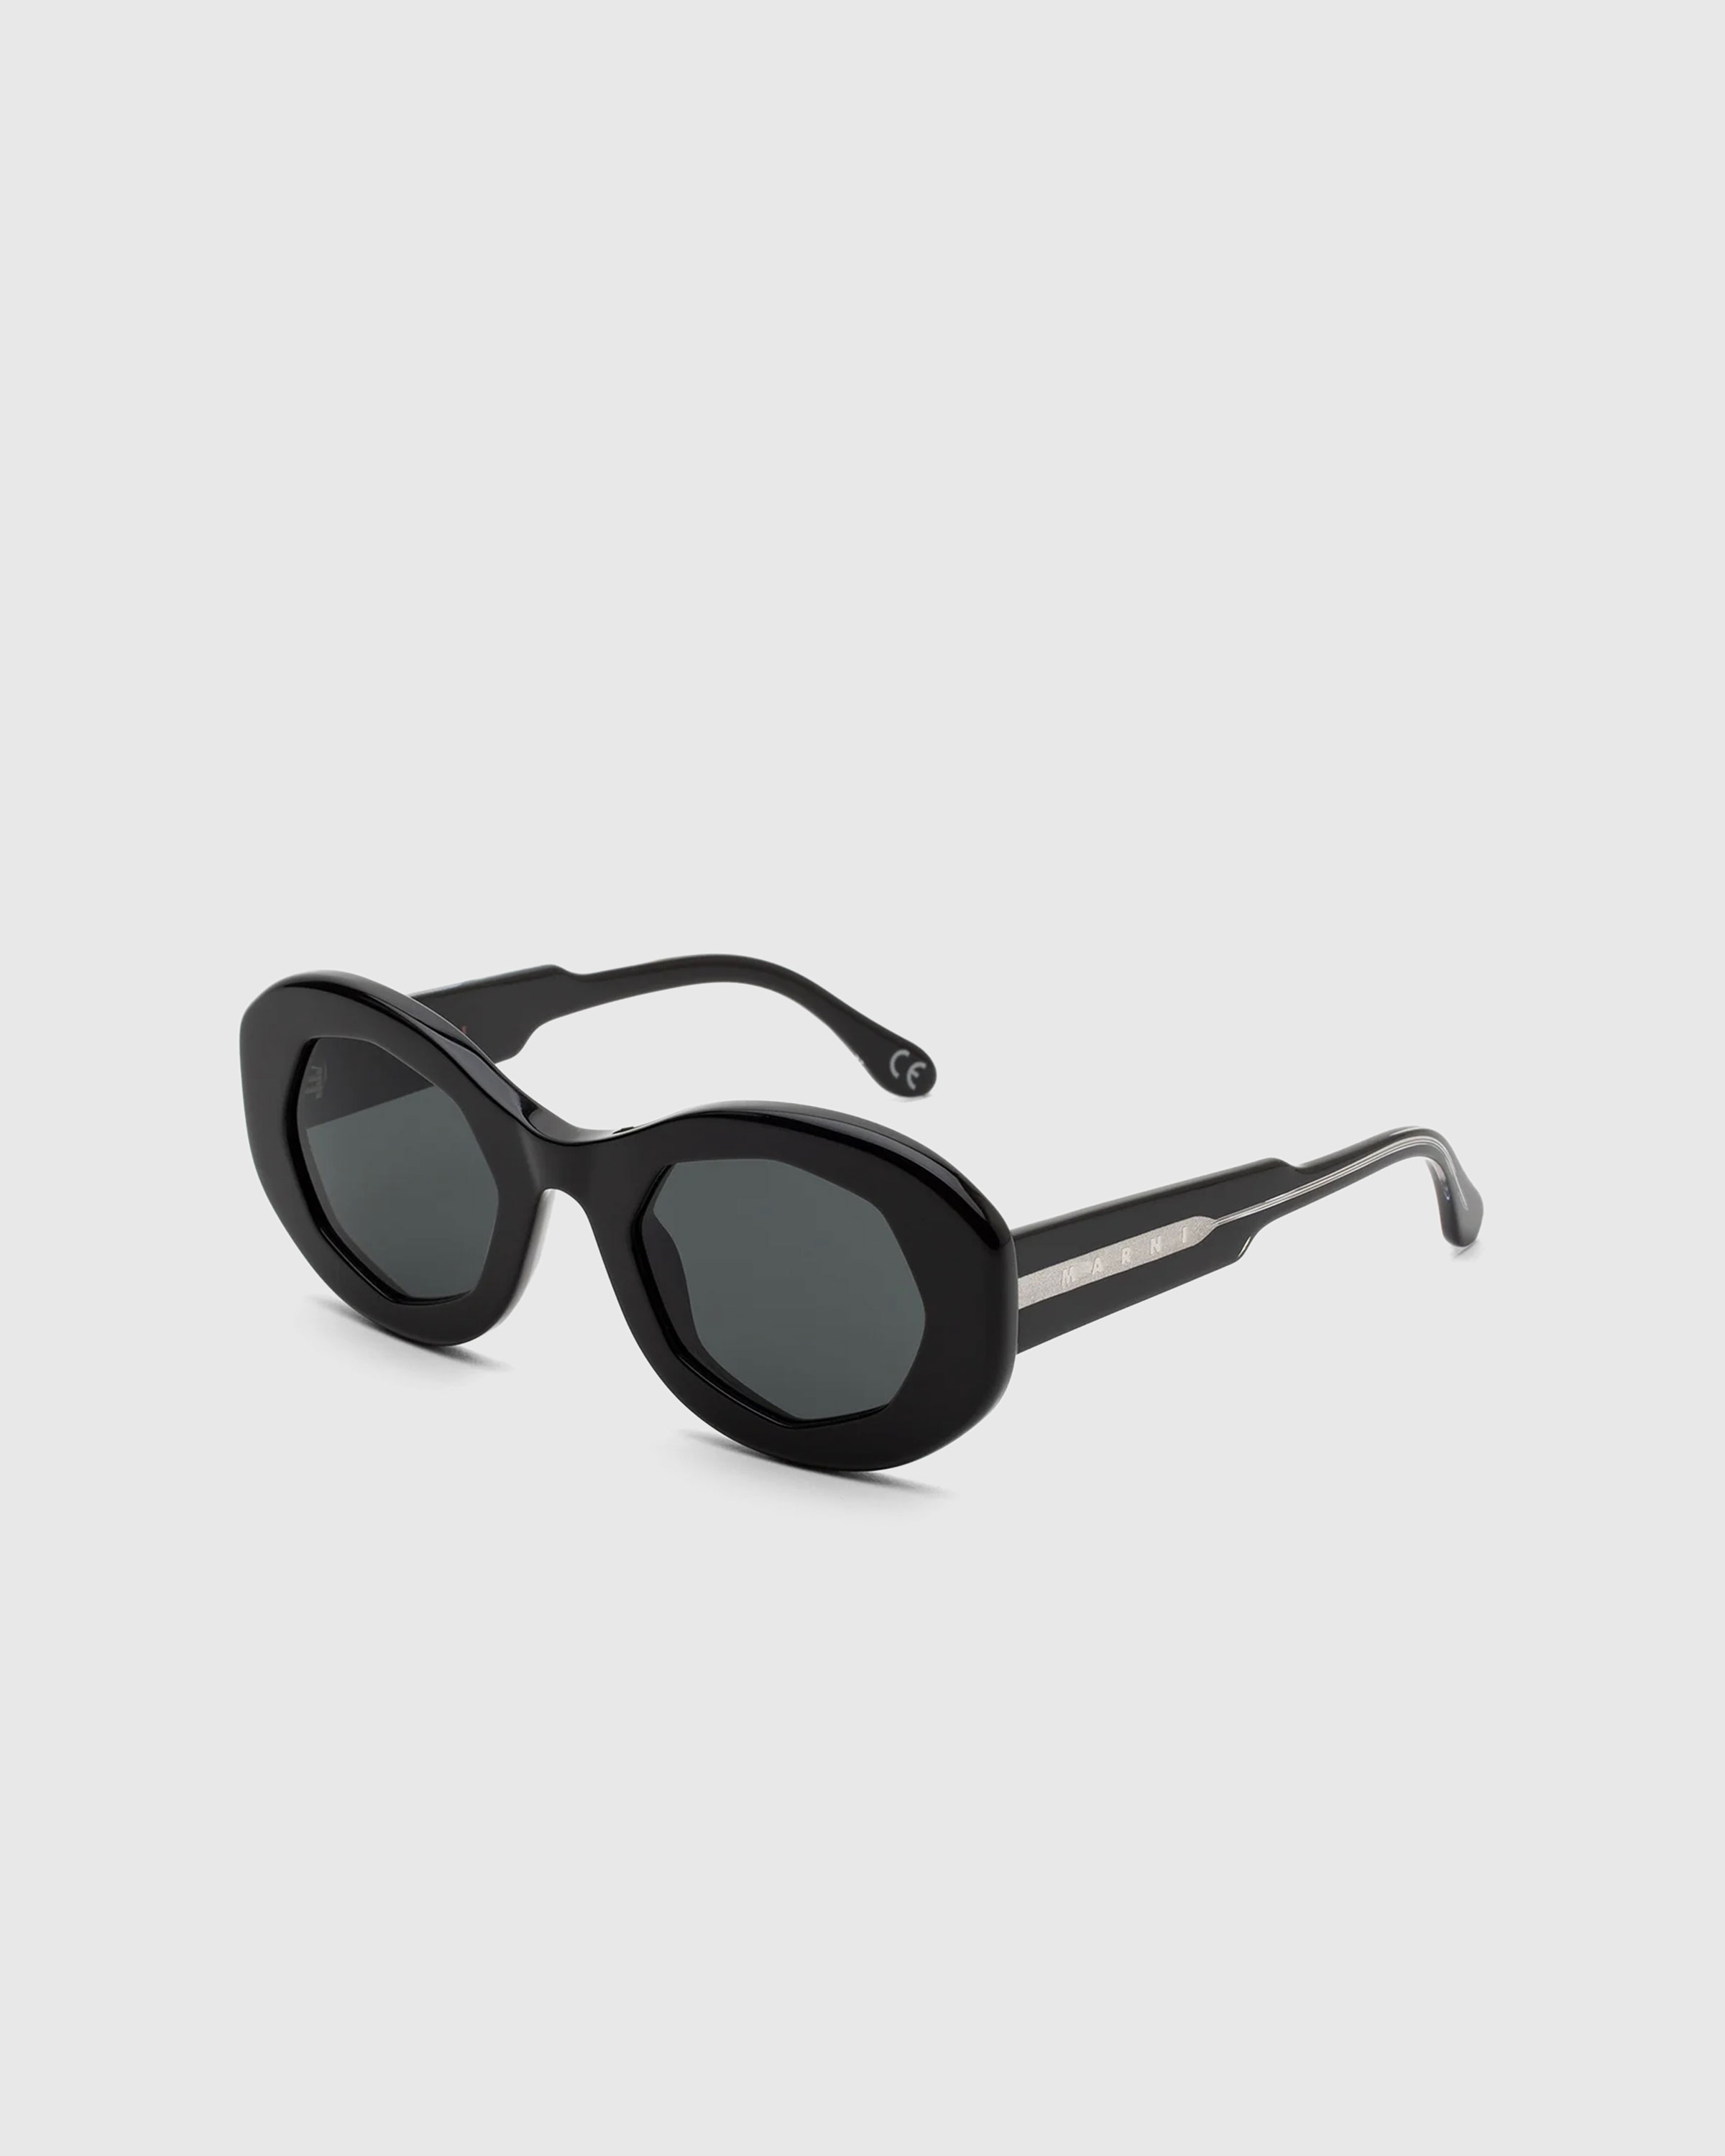 Marni x retrosuperfuture – Mount Bromo Blck Fndtn - Sunglasses - Black - Image 3